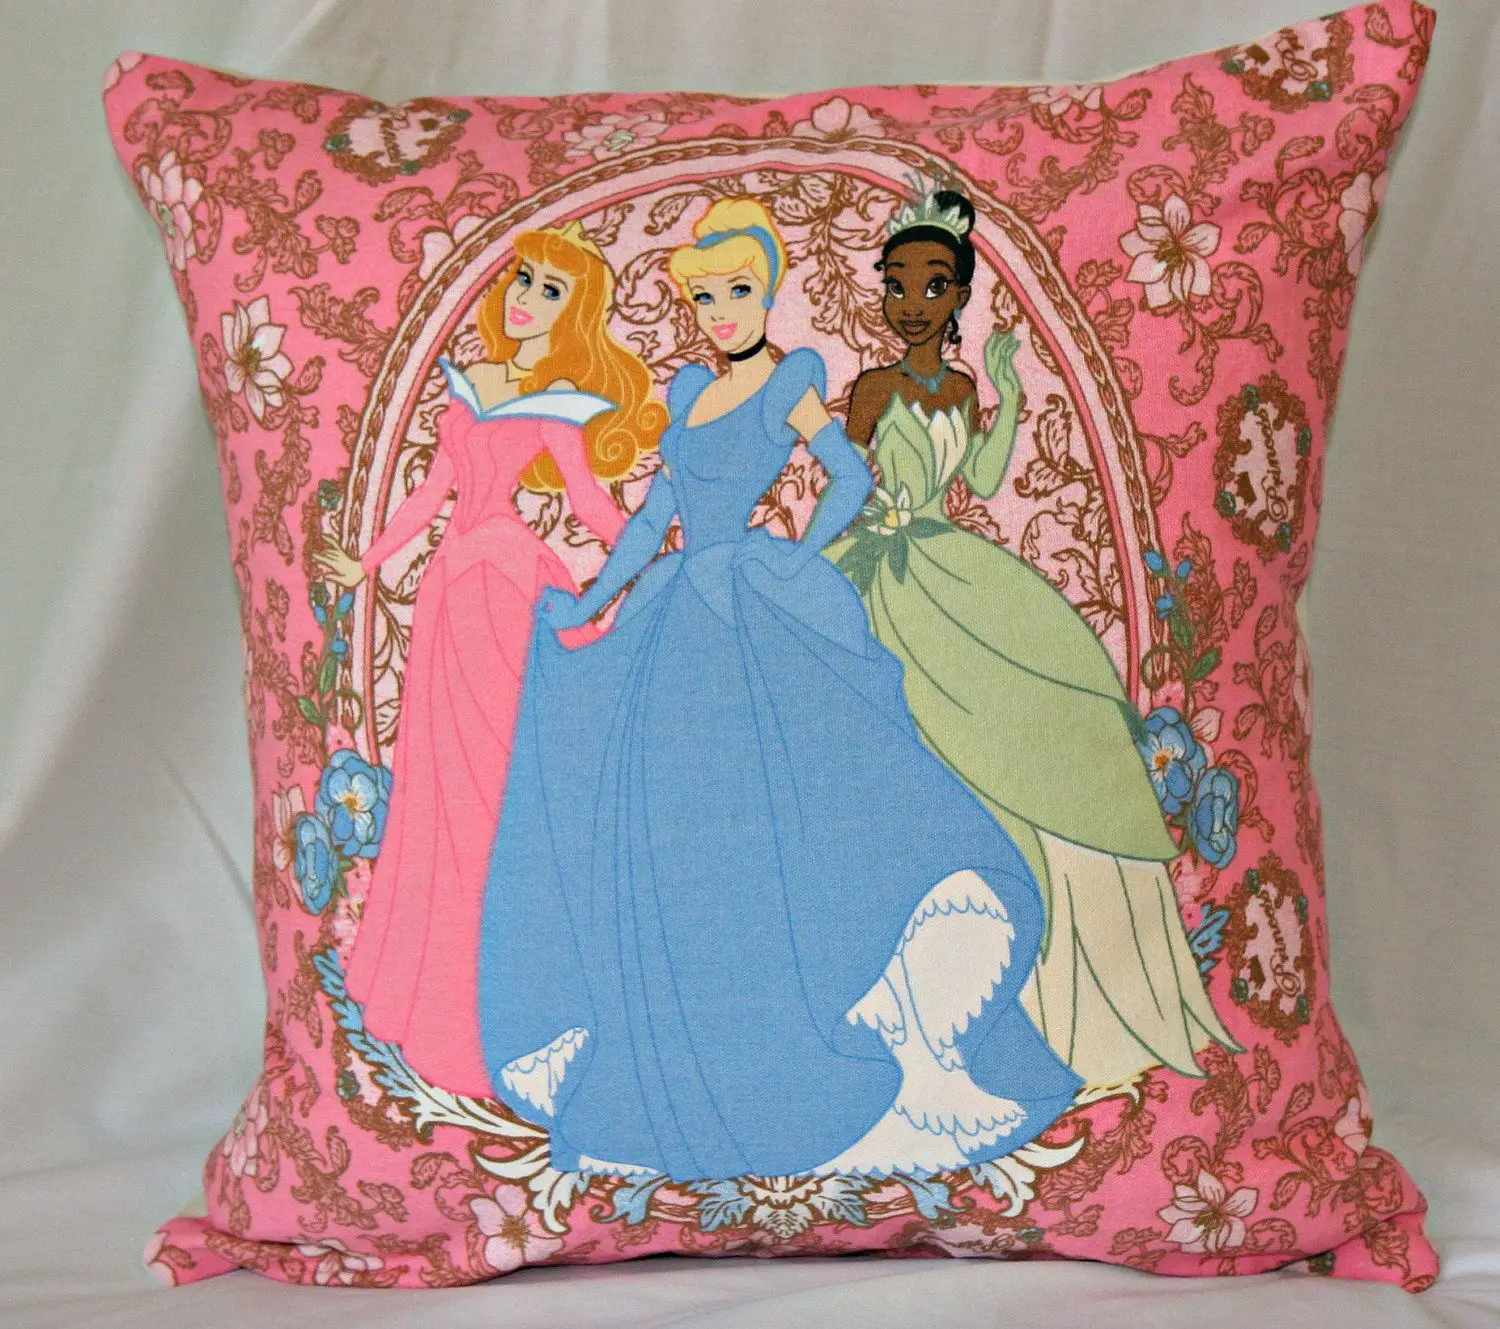 Disney Princess Throw Pillow Cover Pink Blue and Cream